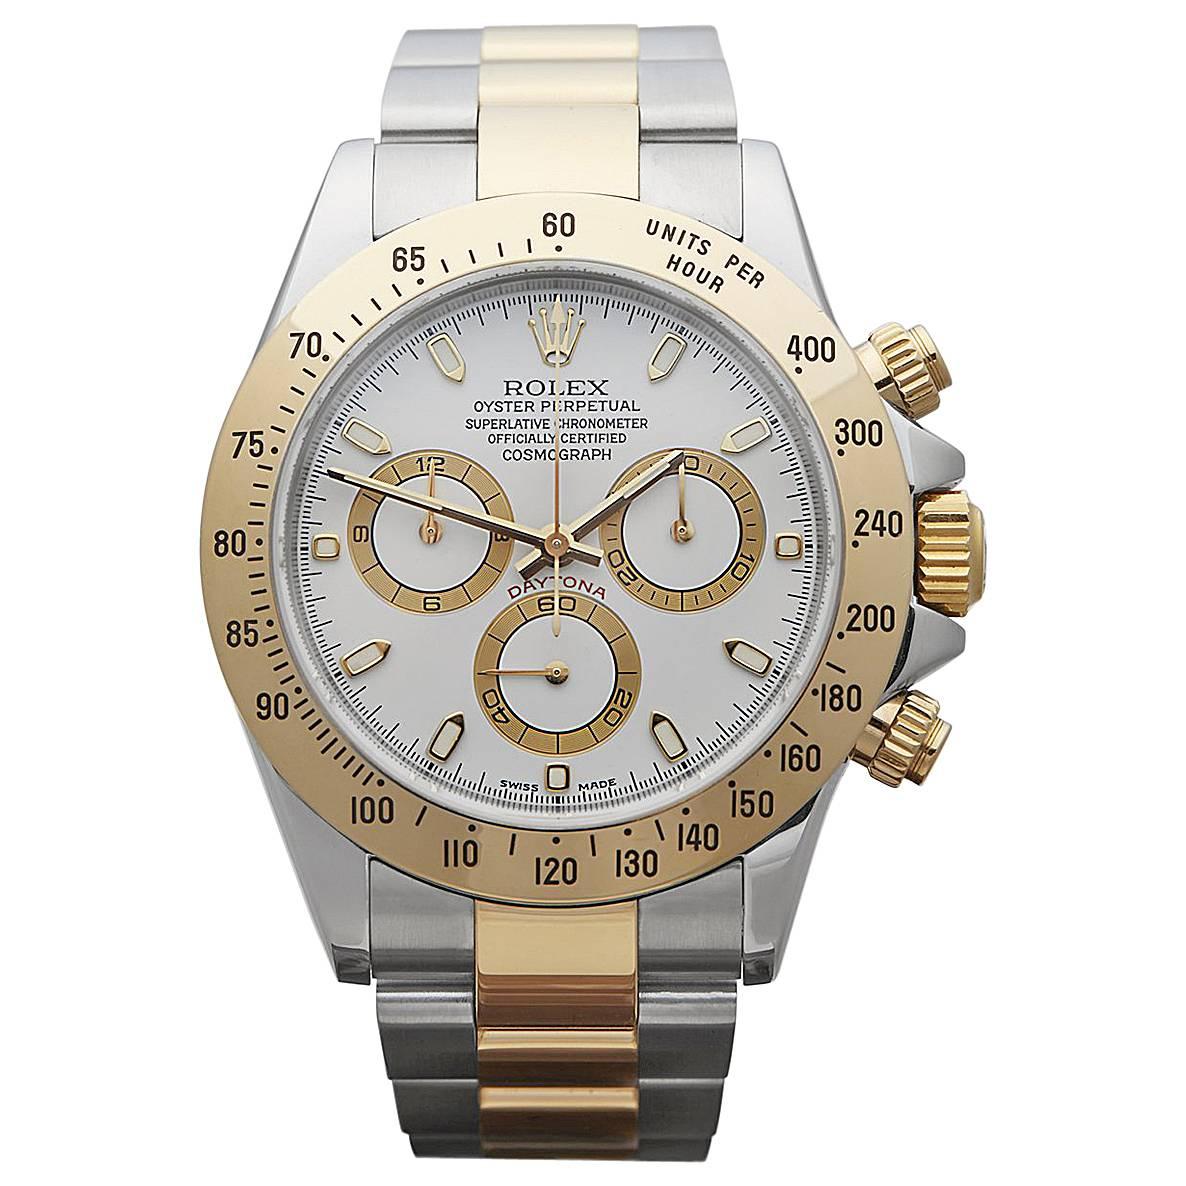 Rolex Daytona Gold Steel cosomograph chronograph Automatic Wristwatch Ref 116523